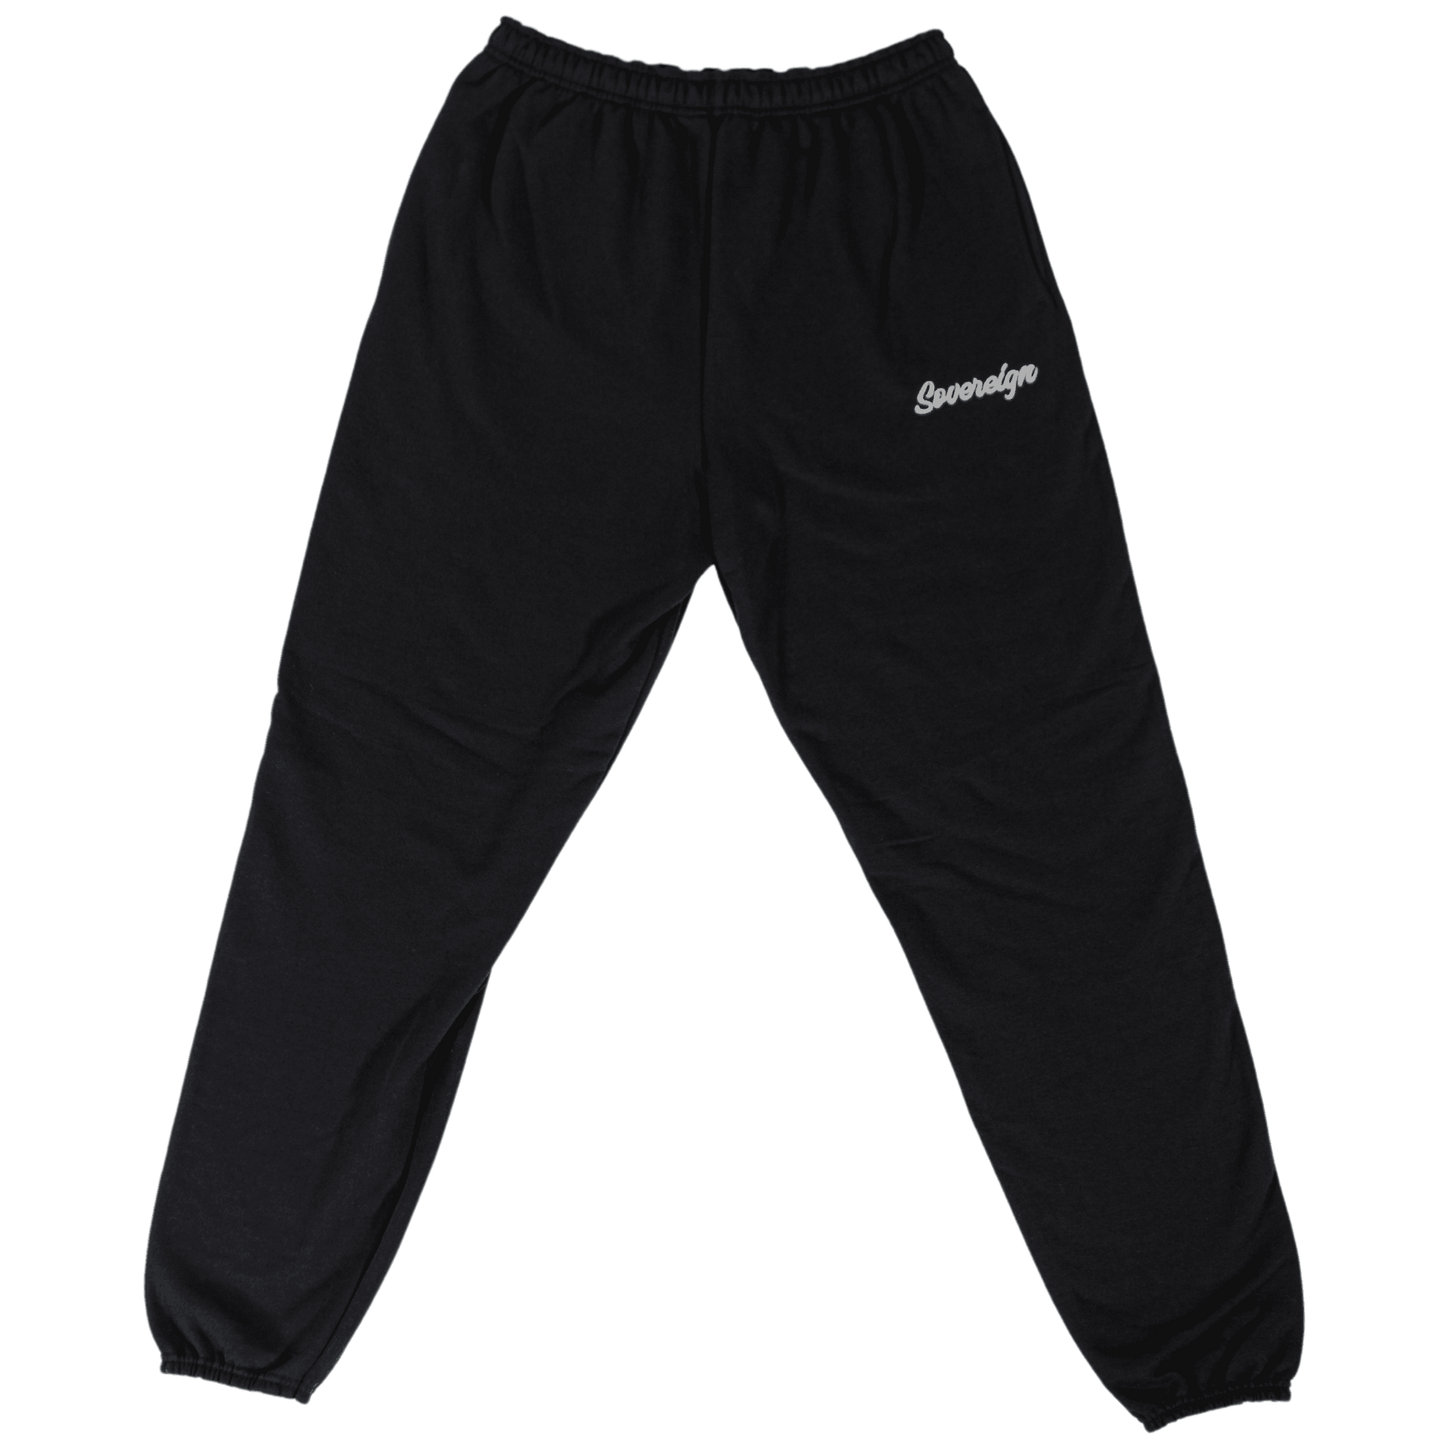 Sovereign Lifestyle Baggy Oversized Sweatpants Grey and Black Cursive Script